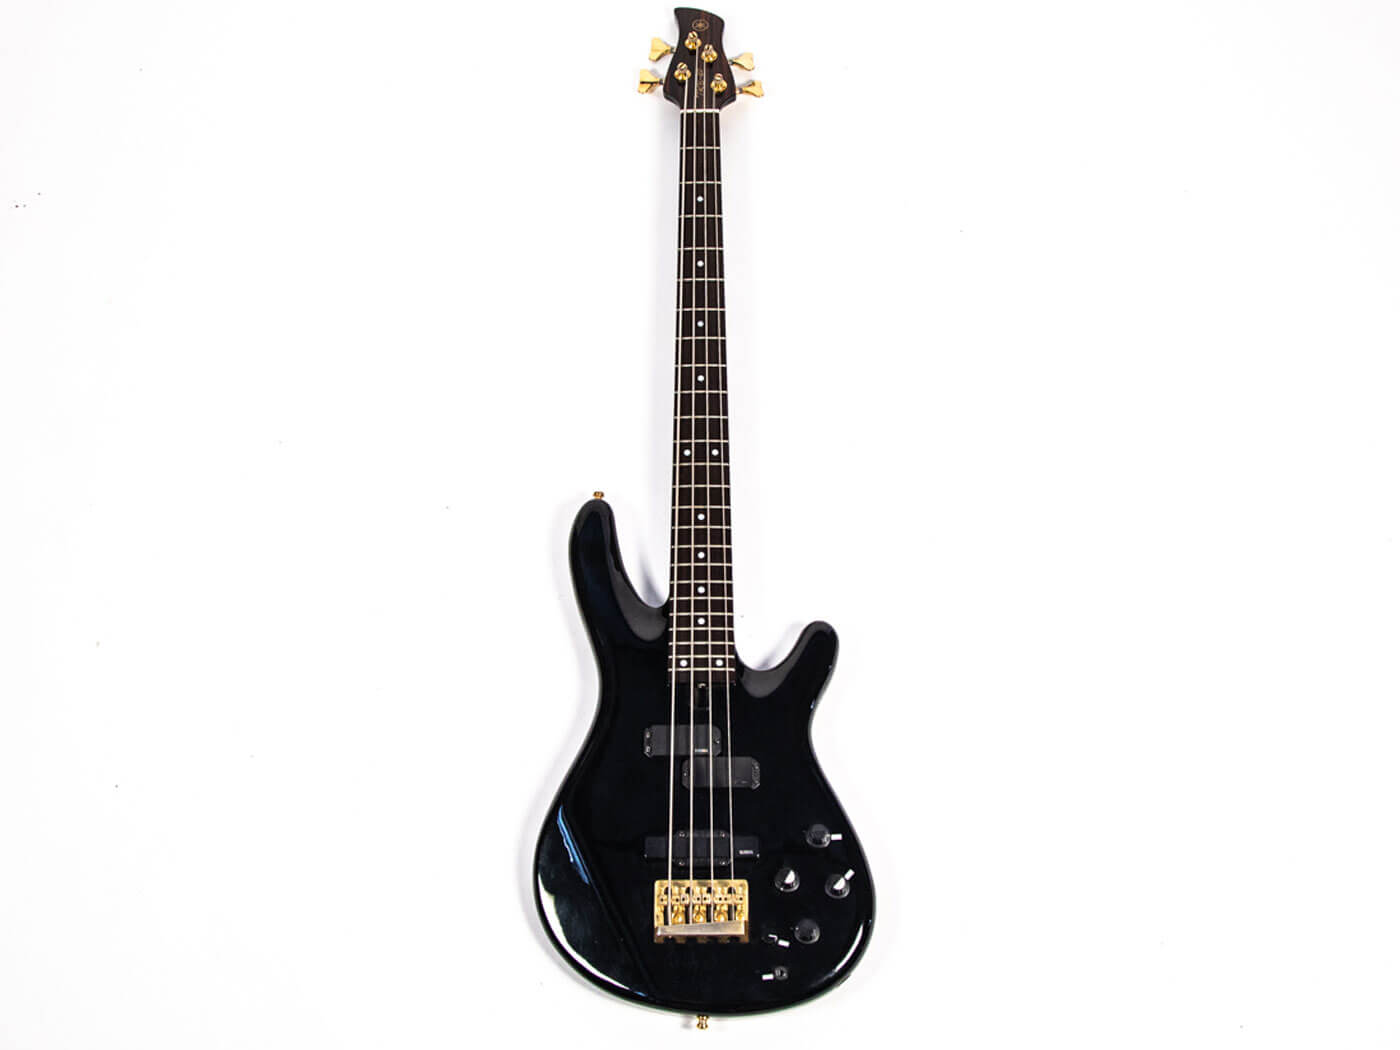 Daryl Stuermer's Yamaha Bass